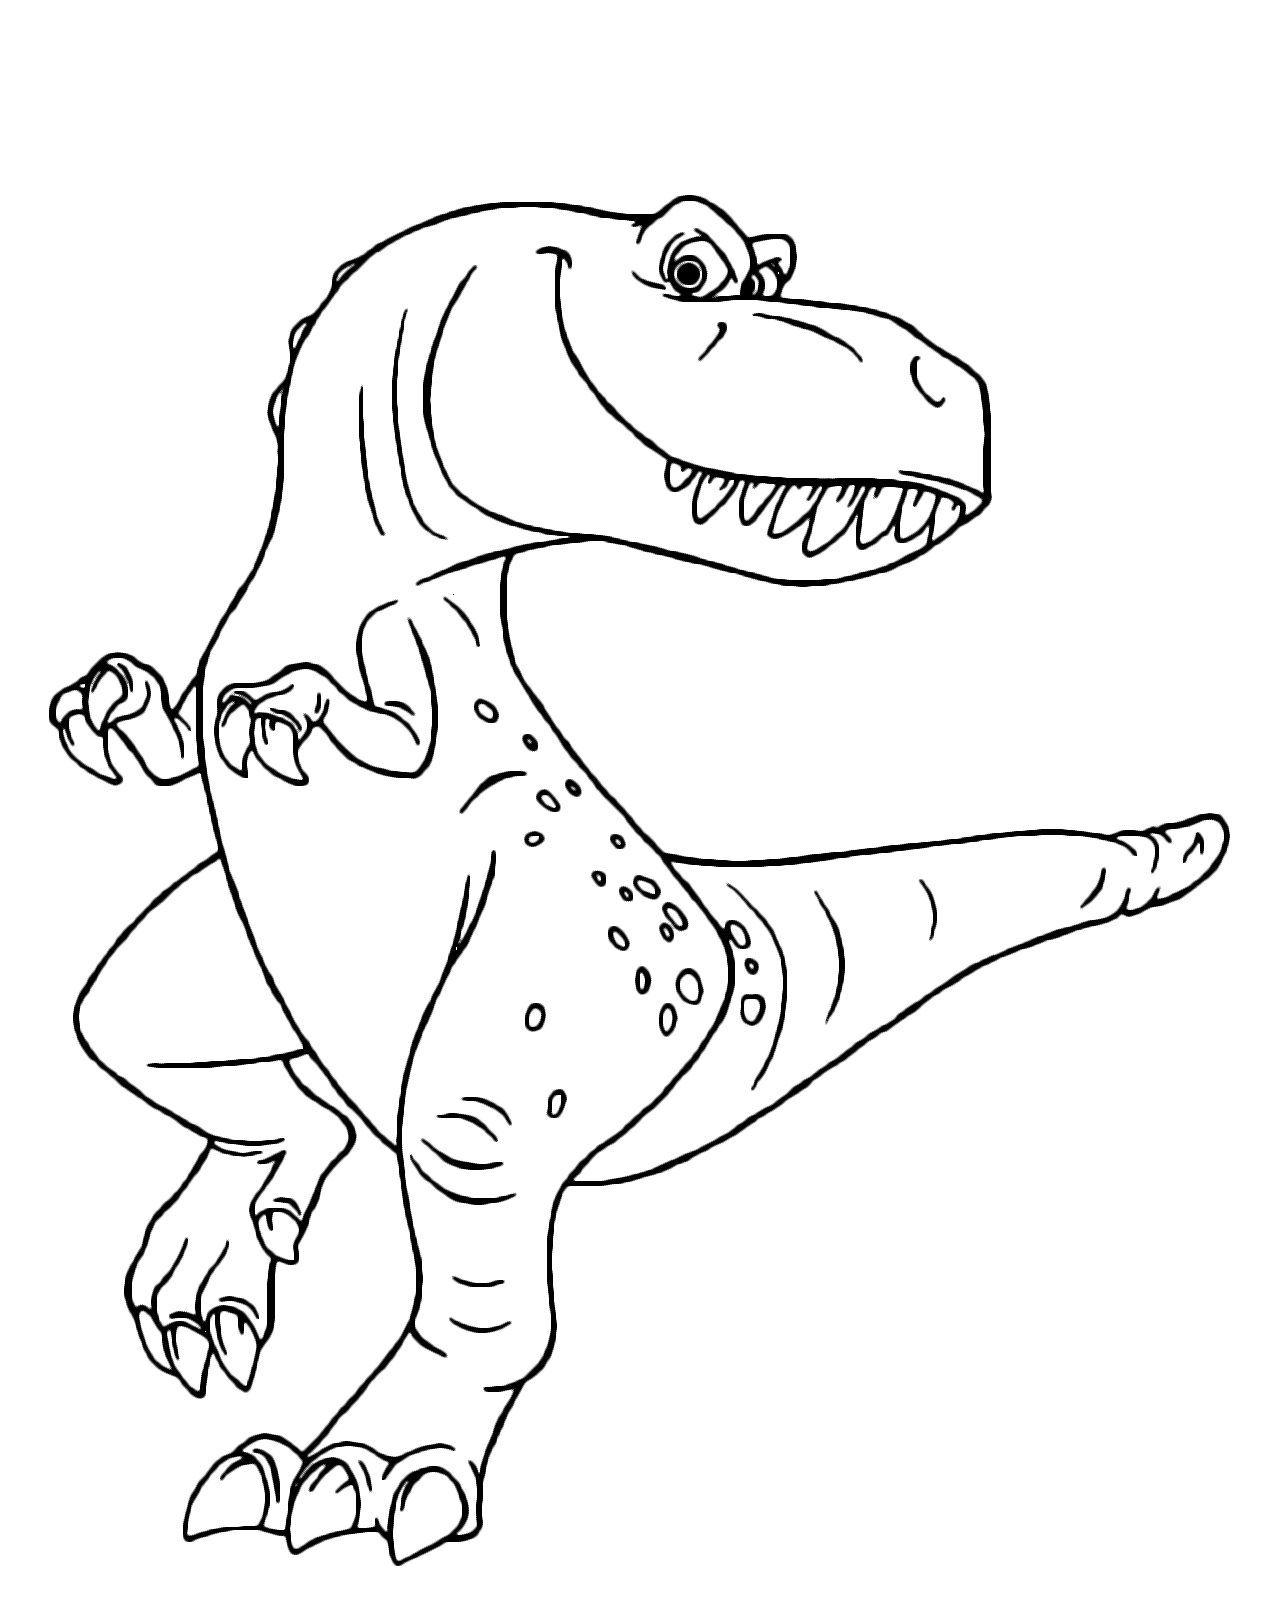 The Good Dinosaur - Butch's older daughter Ramsey